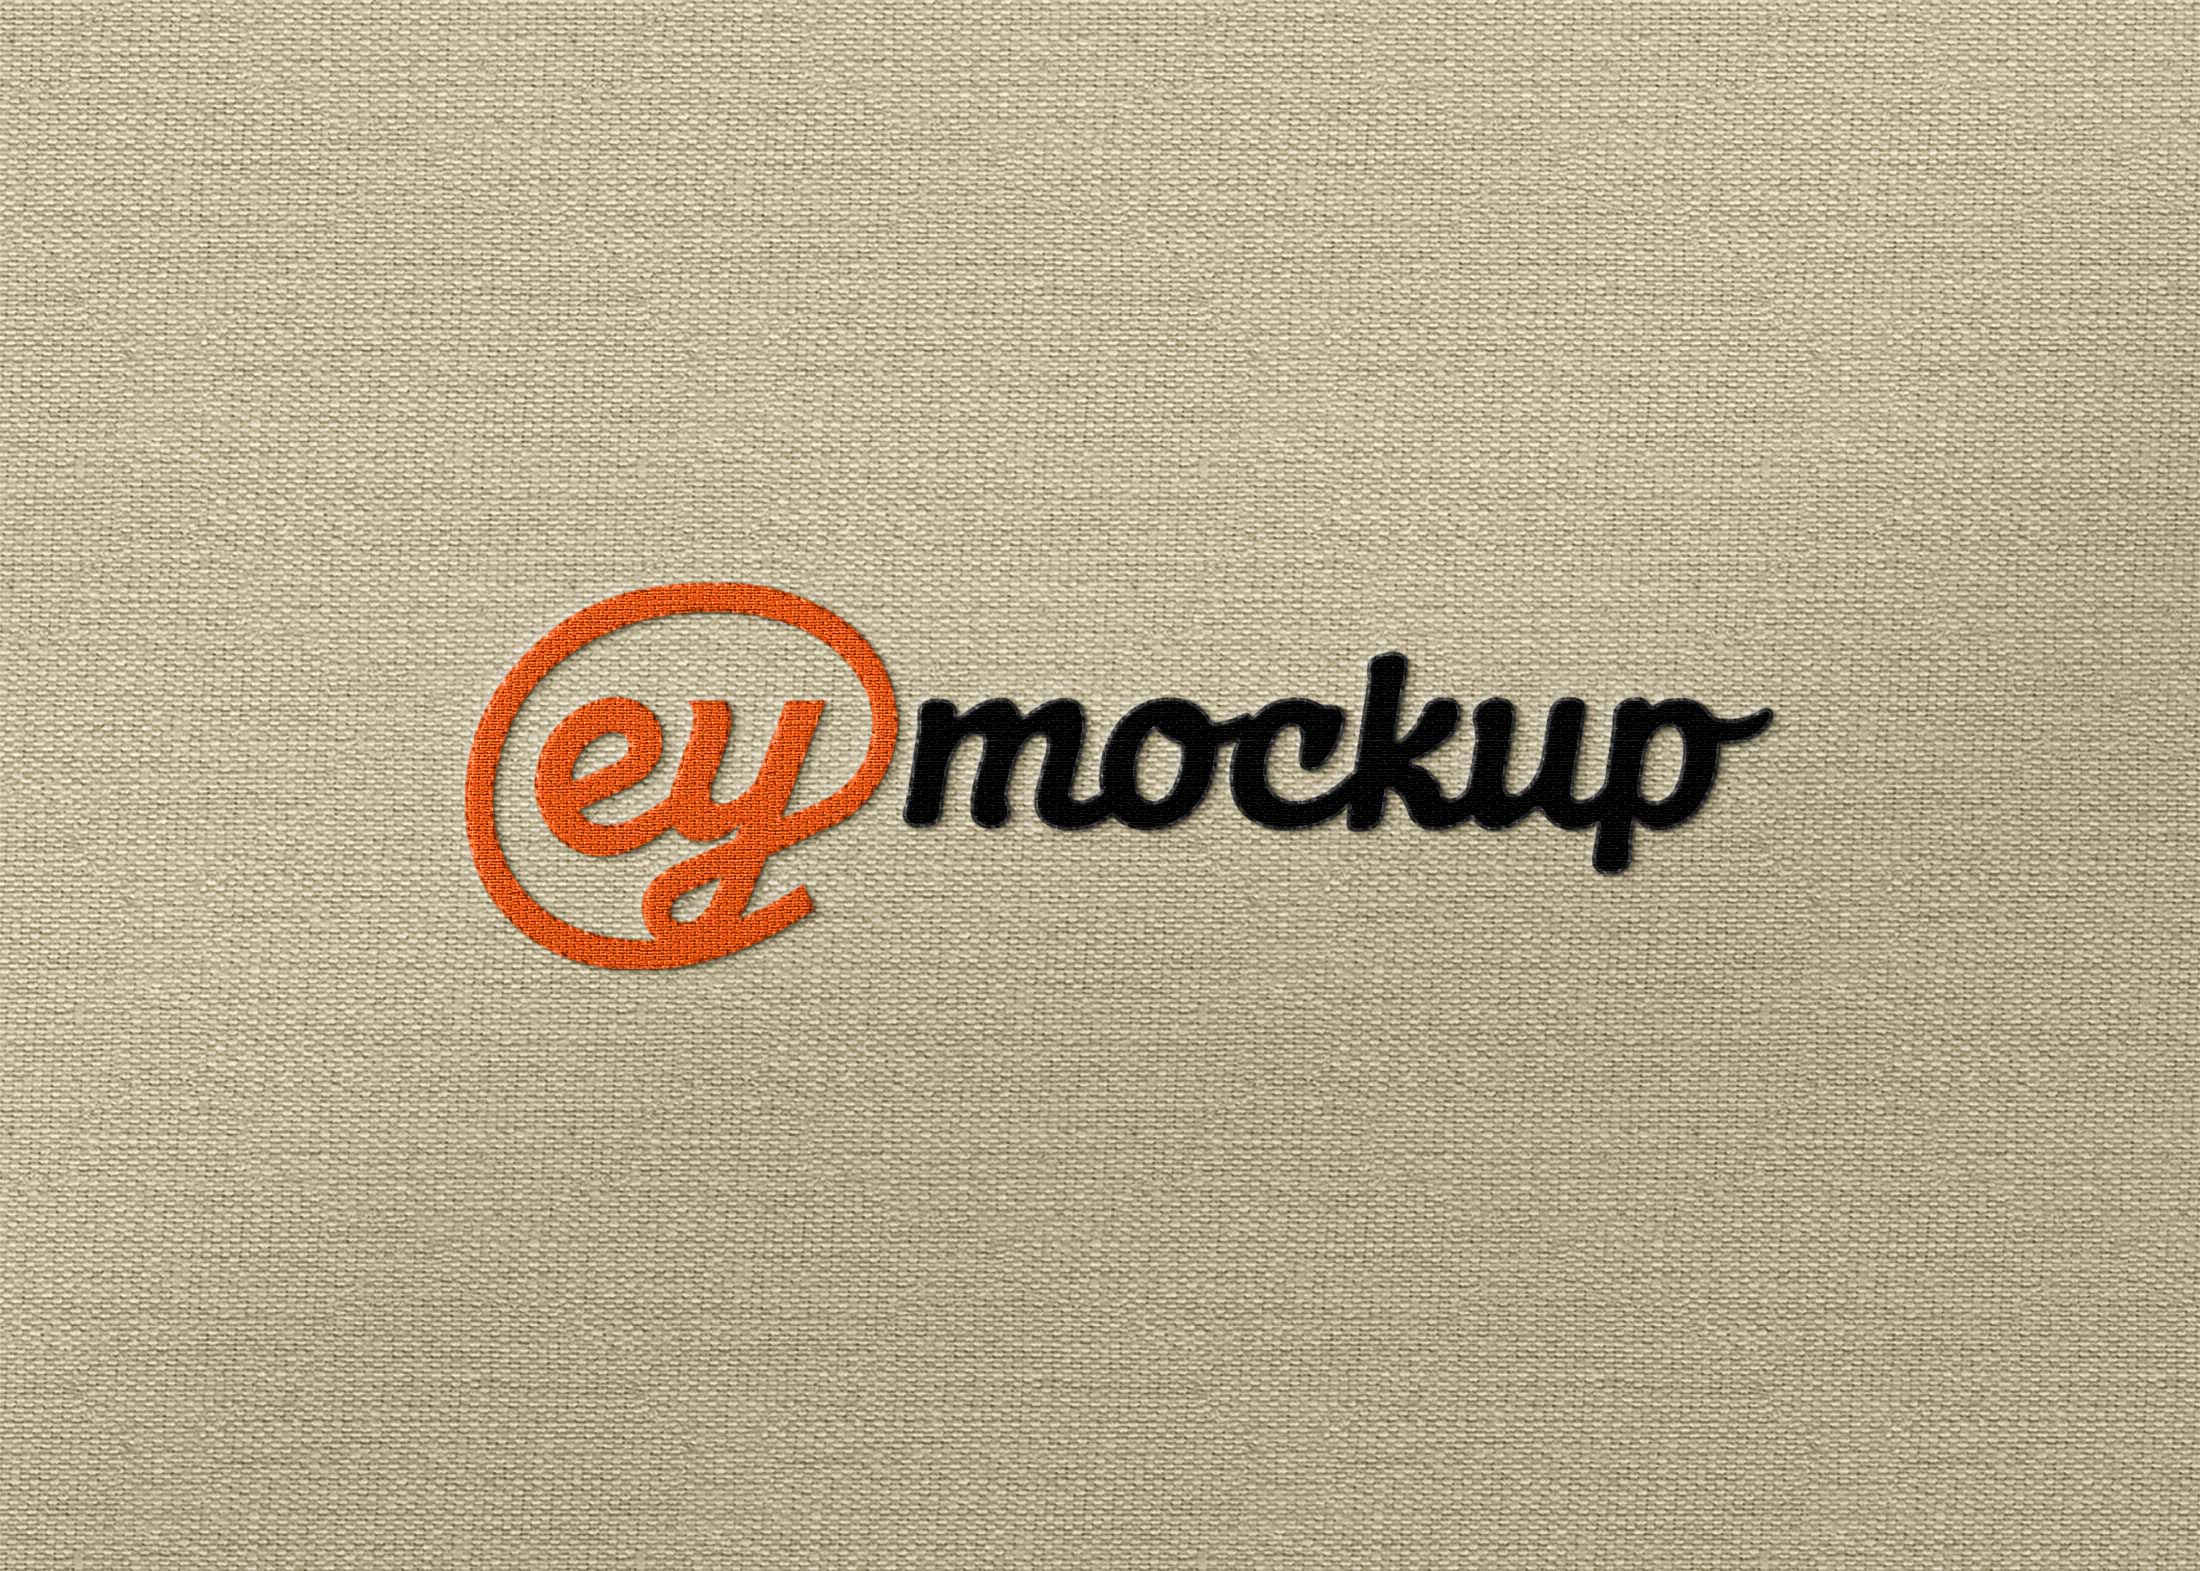 eymockup Plain Embroidery Logo Mockup